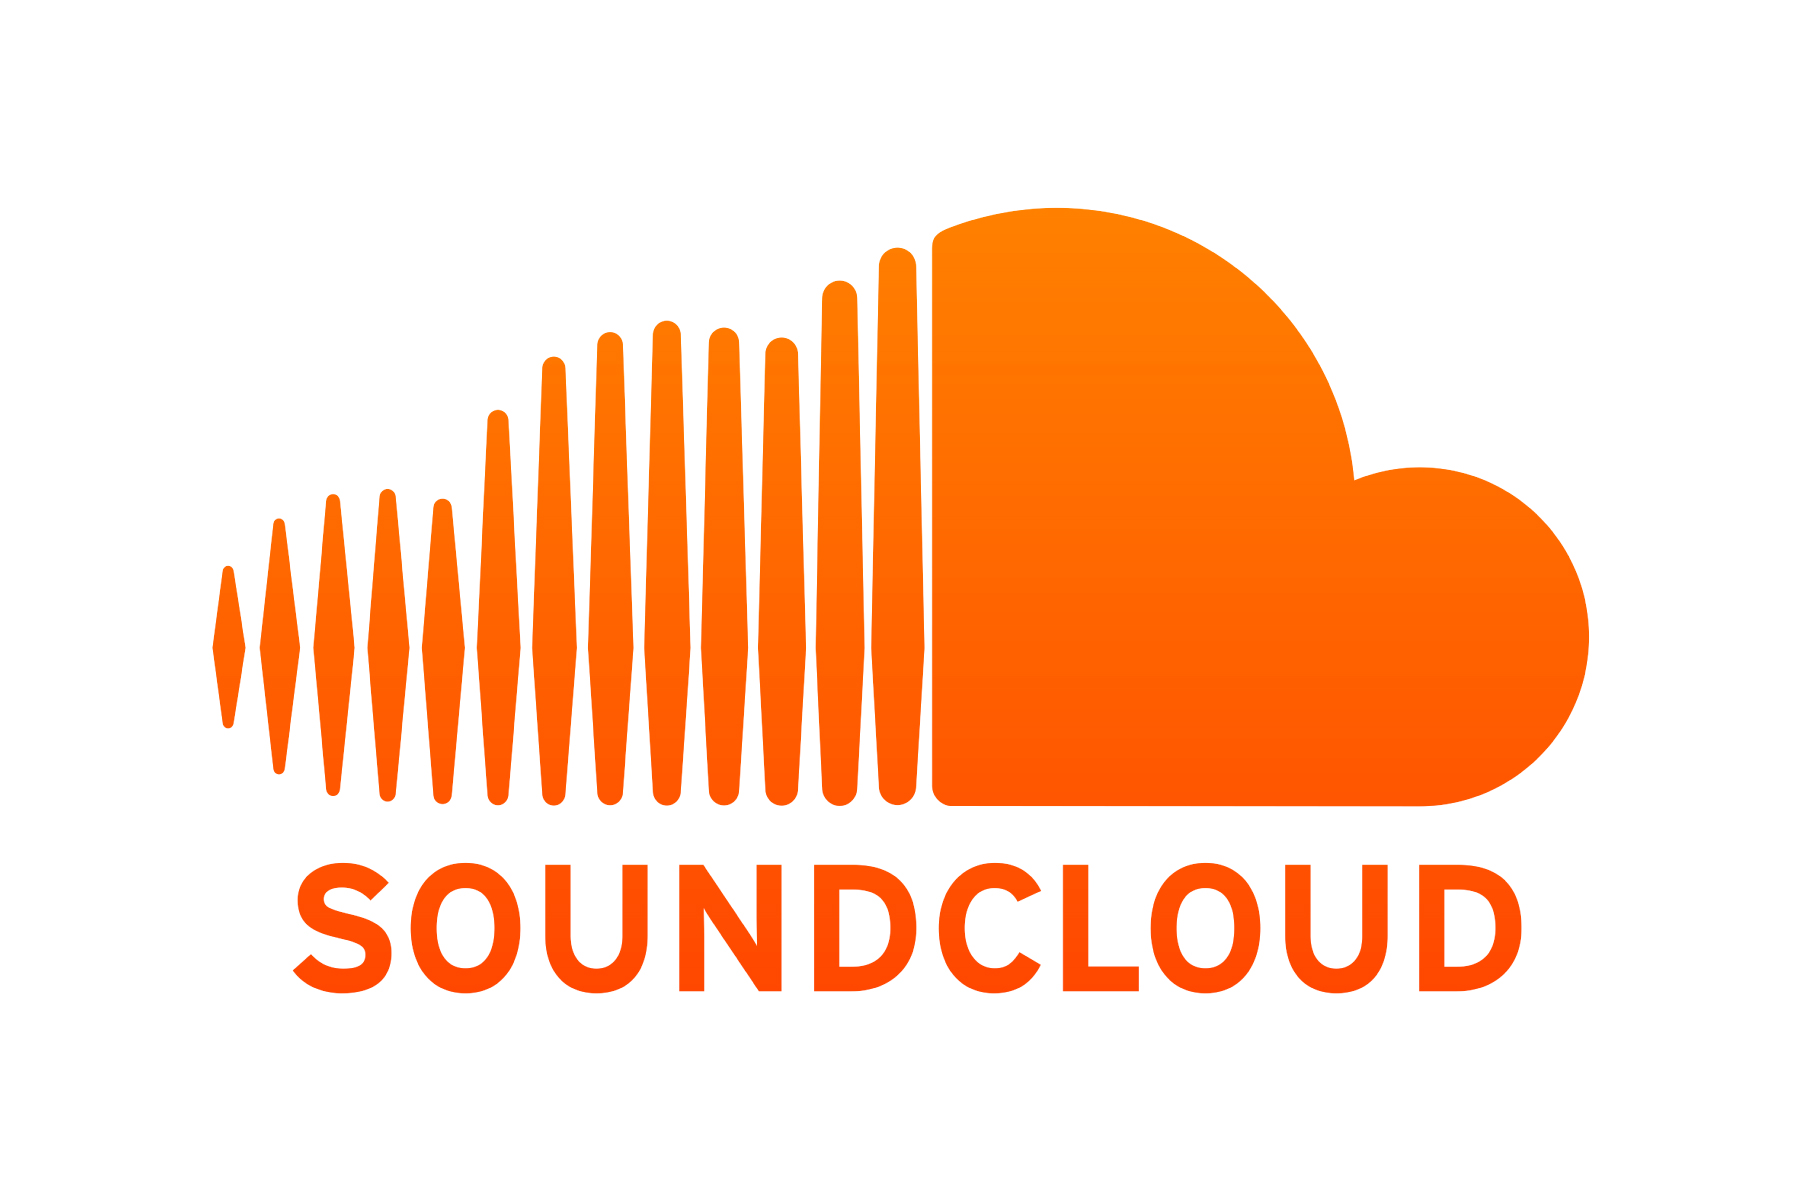 SoundCloud logo: Orange cloud shape with rounded edges, above text.